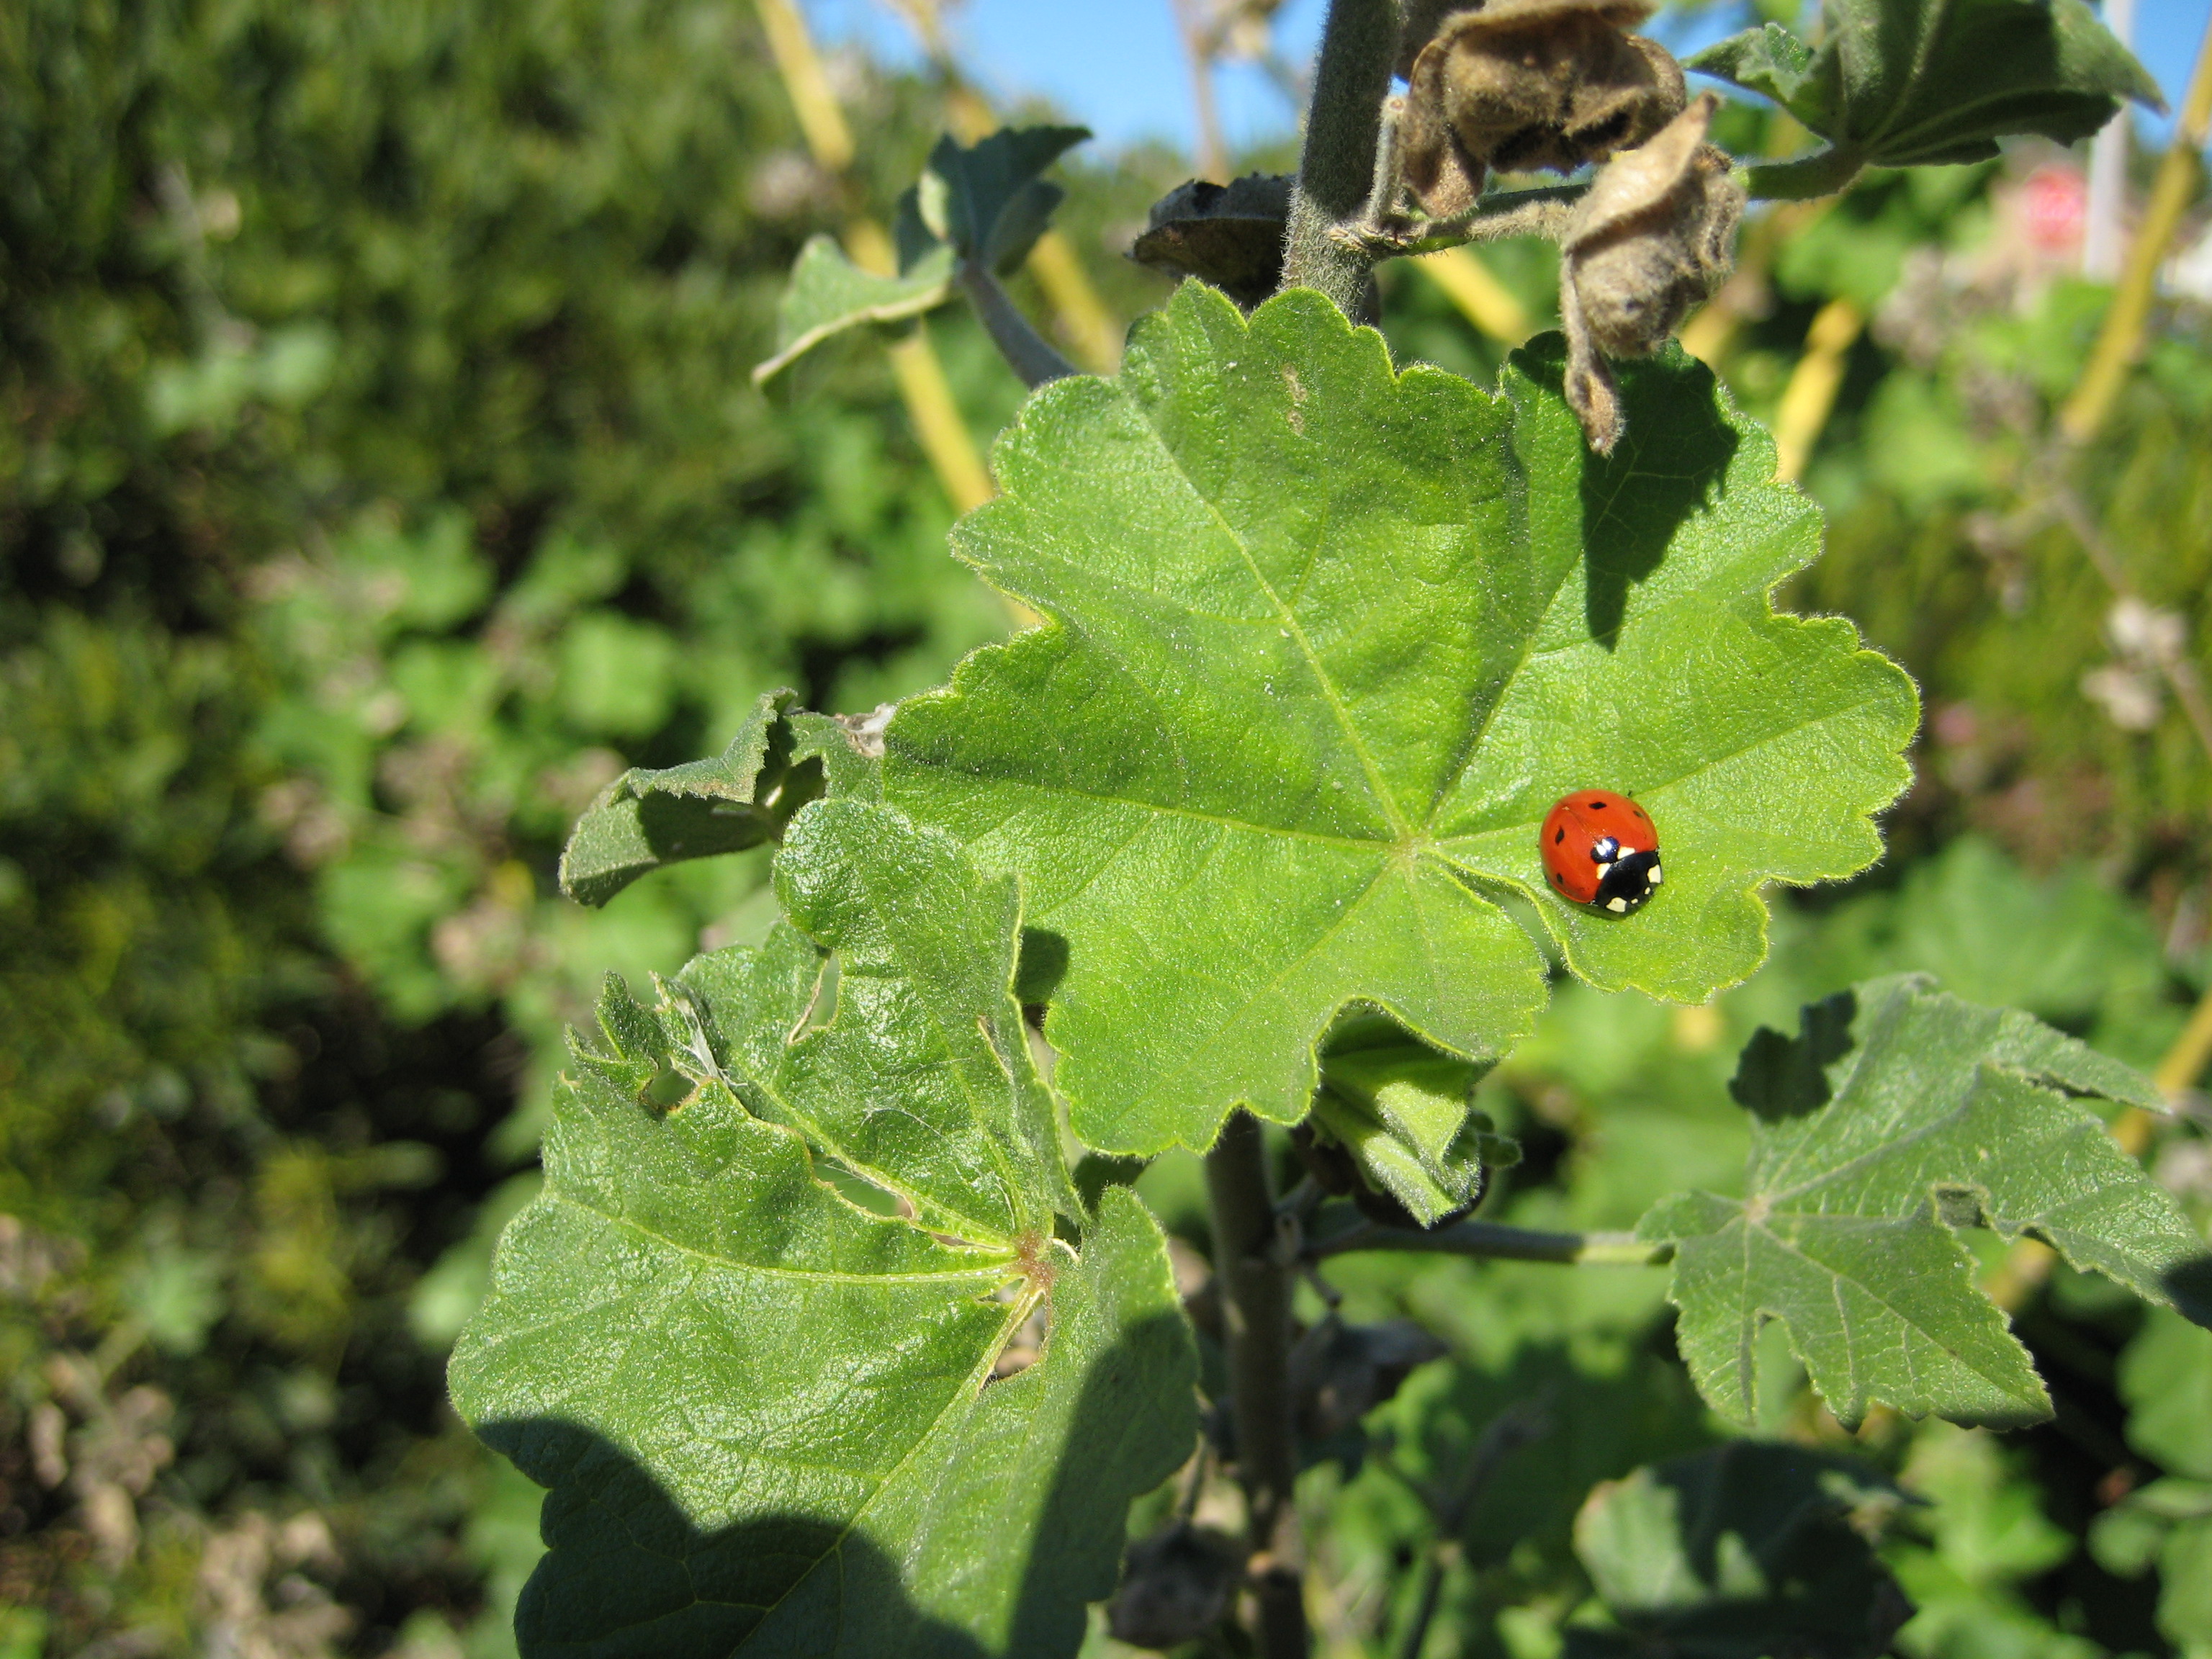 Red and black ladybug on a green leaf. 